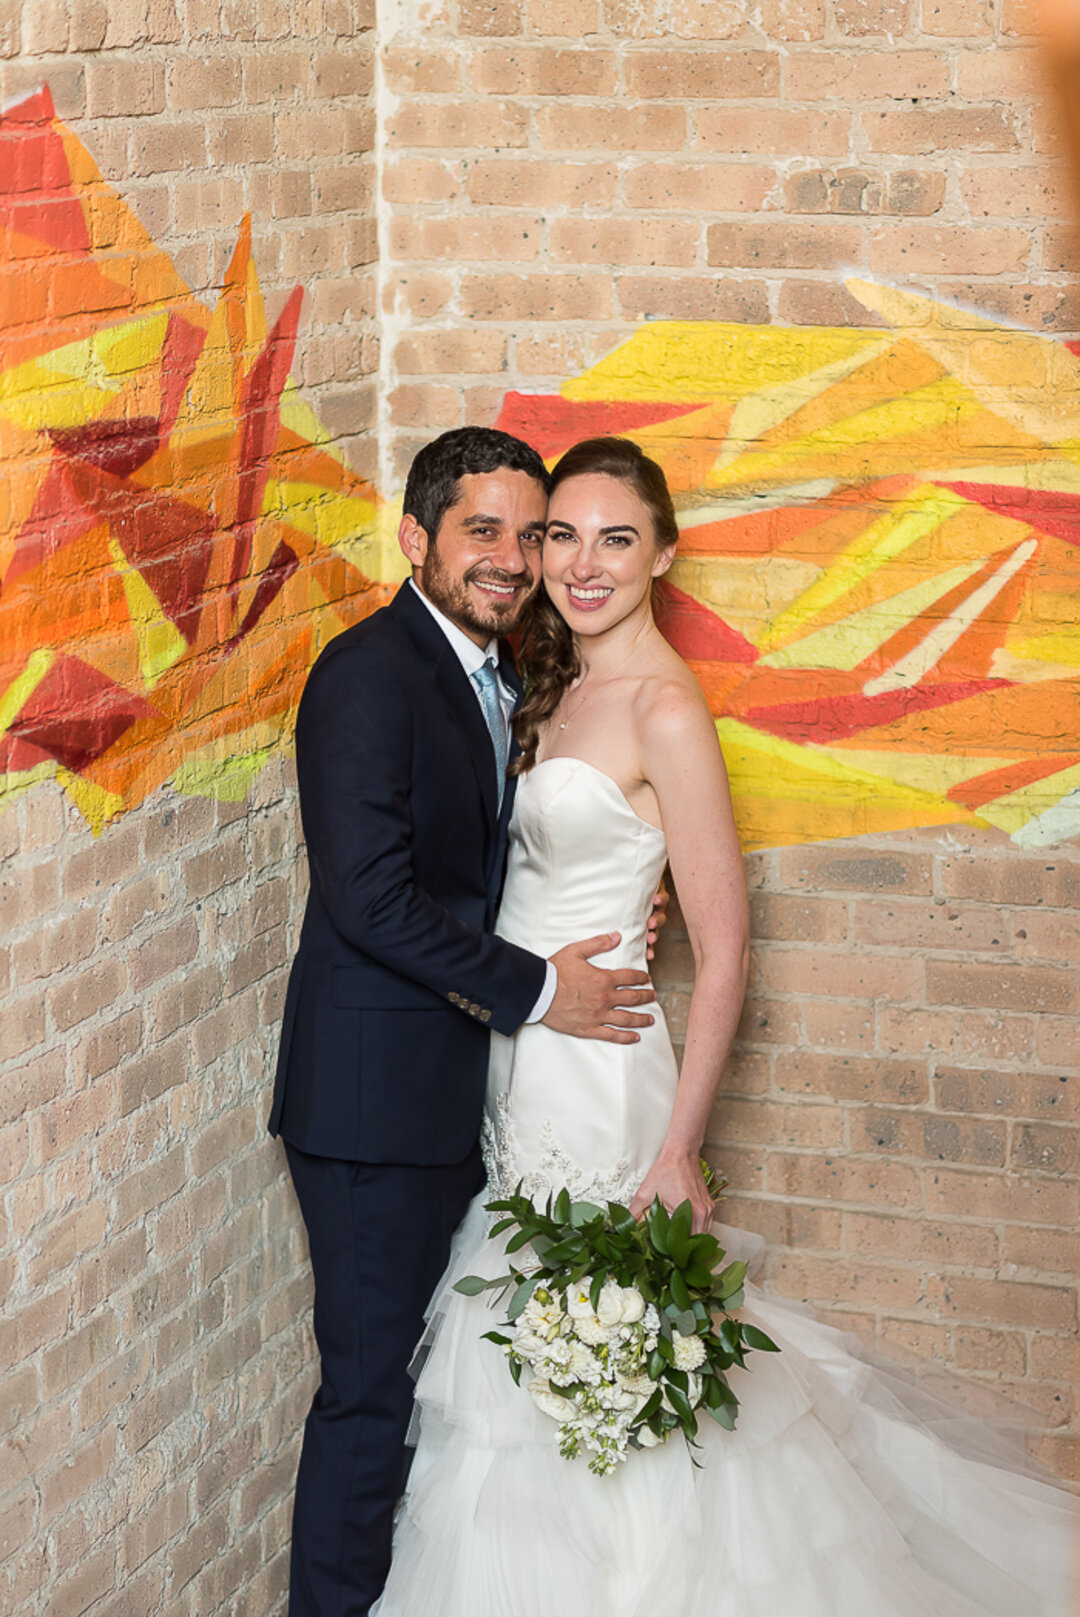 Lacuna Lofts Modern Day Jewish Wedding captured by Ashley Hamm Photography. See more modern wedding ideas at CHItheeWED.com!